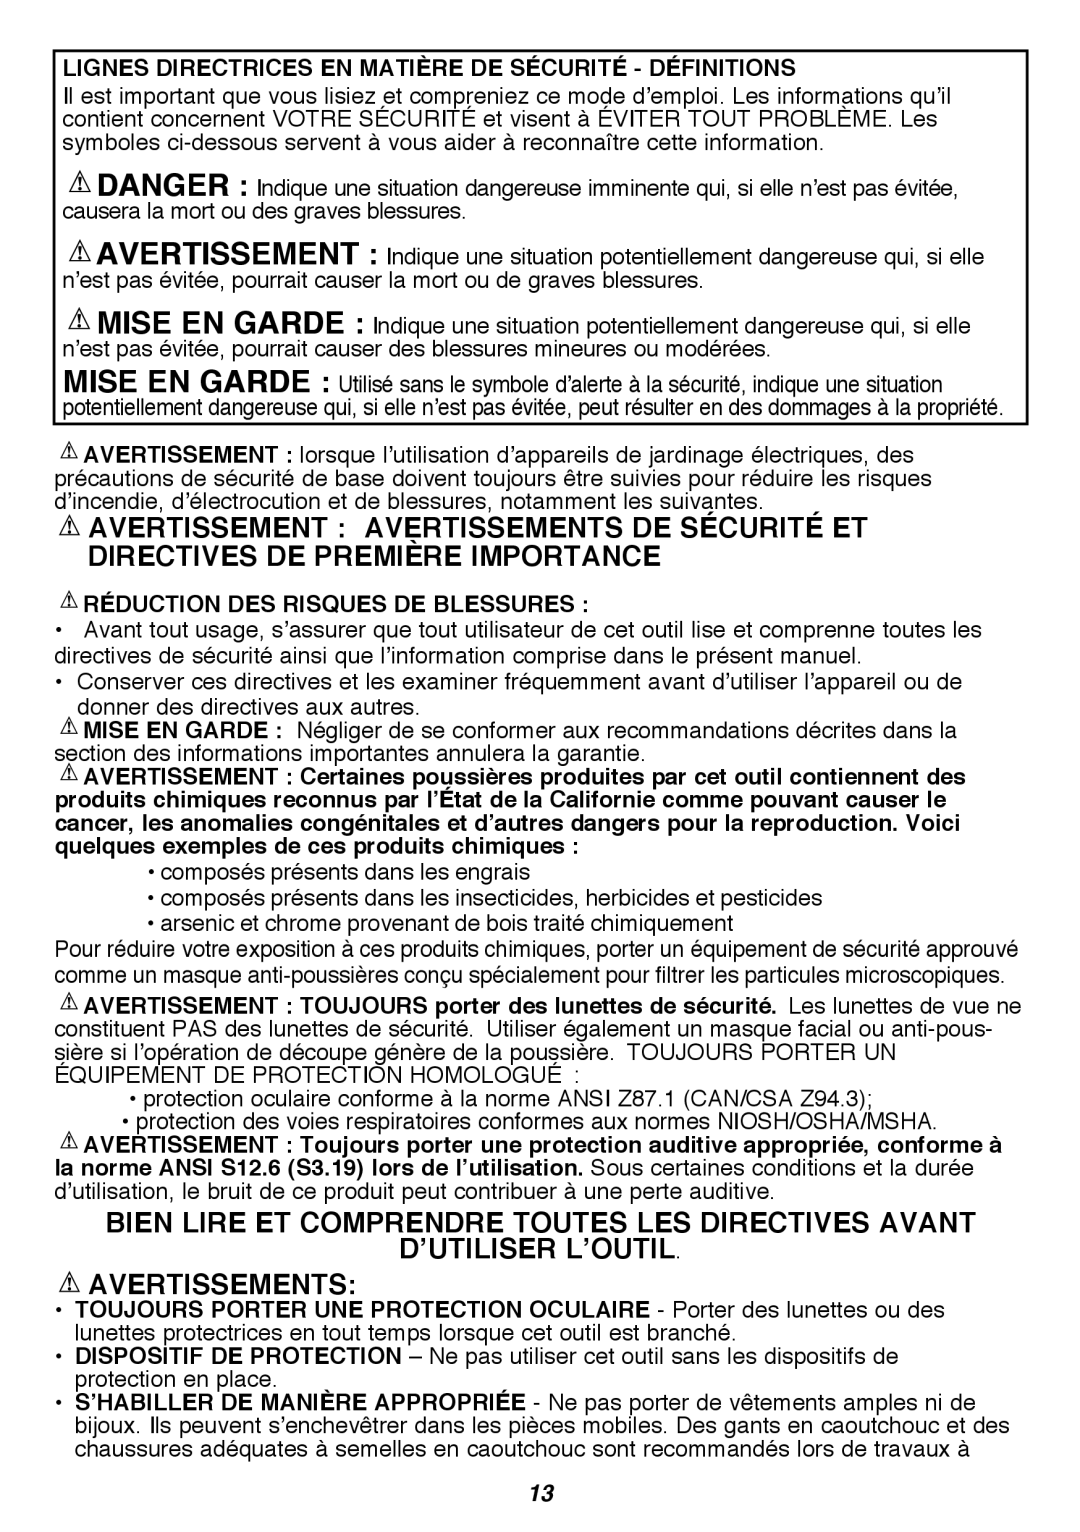 Black & Decker LST300R instruction manual D’Utiliser L’Outil Avertissements 